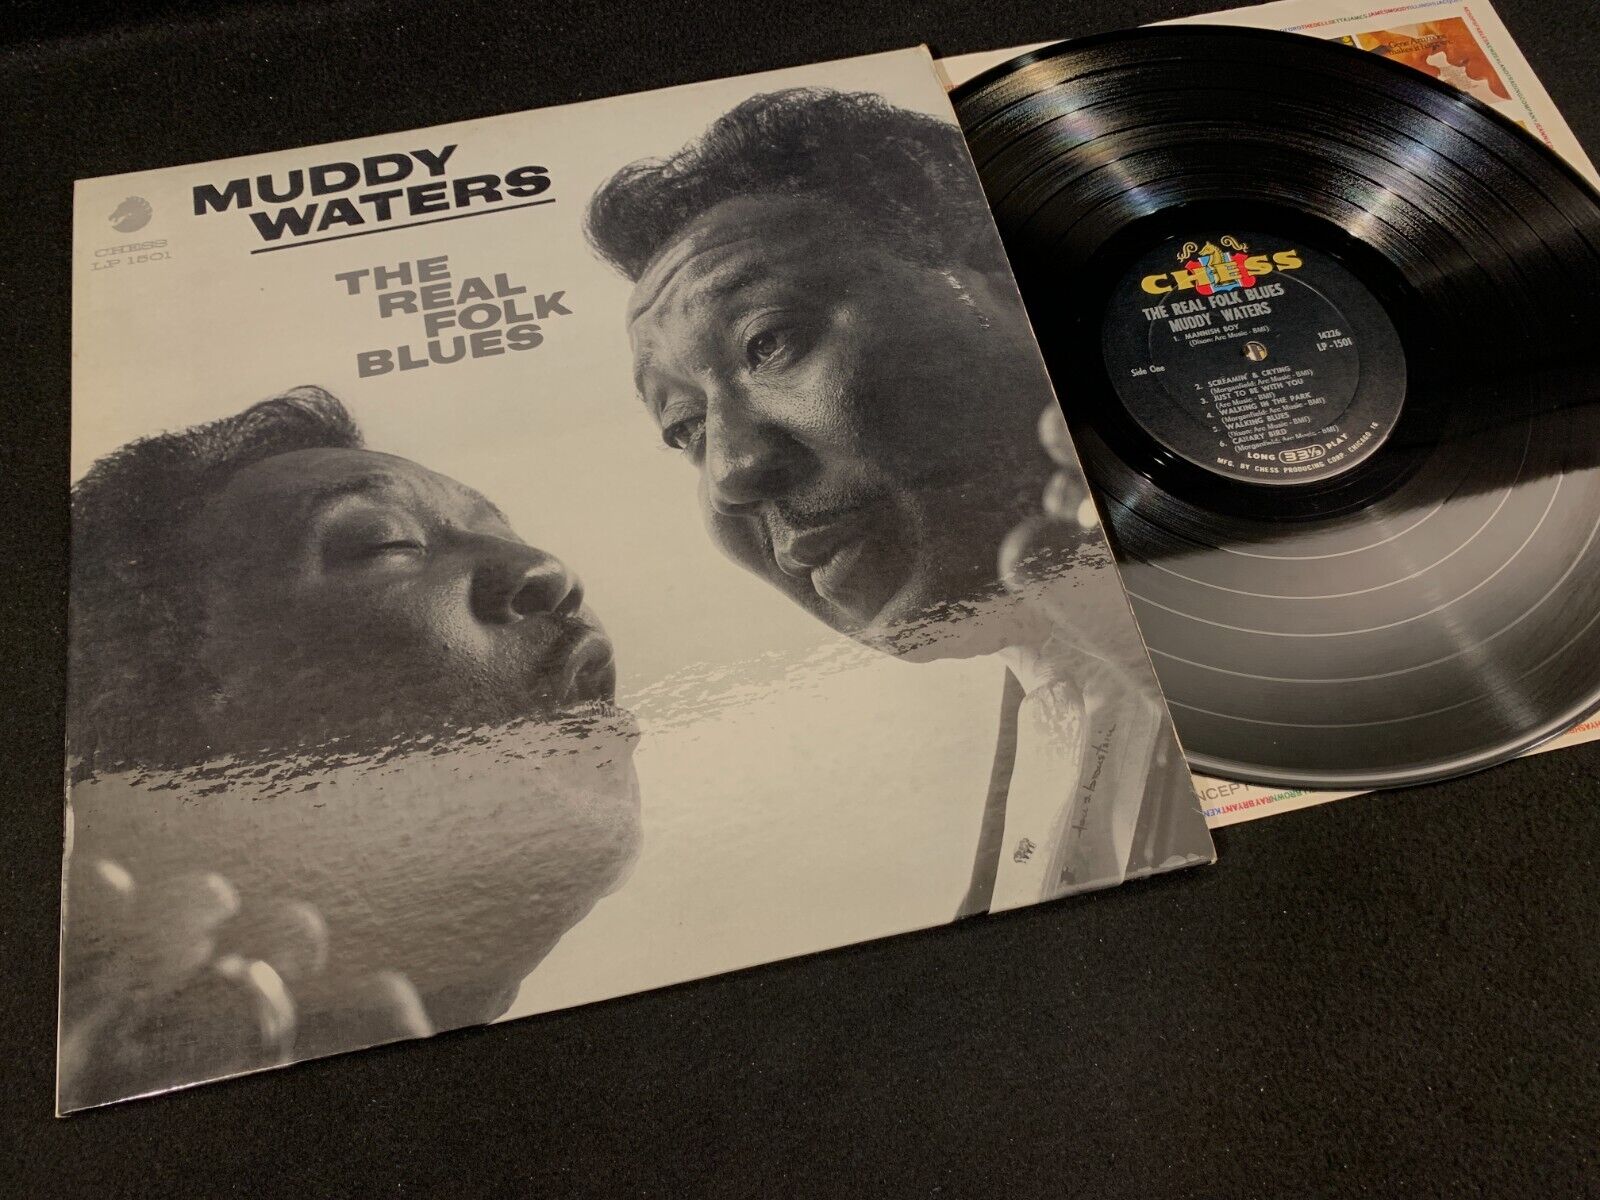 Muddy Waters "The Real Folk Blues" CHESS LP 1501 Rare '66 Black label. Mono  (C)